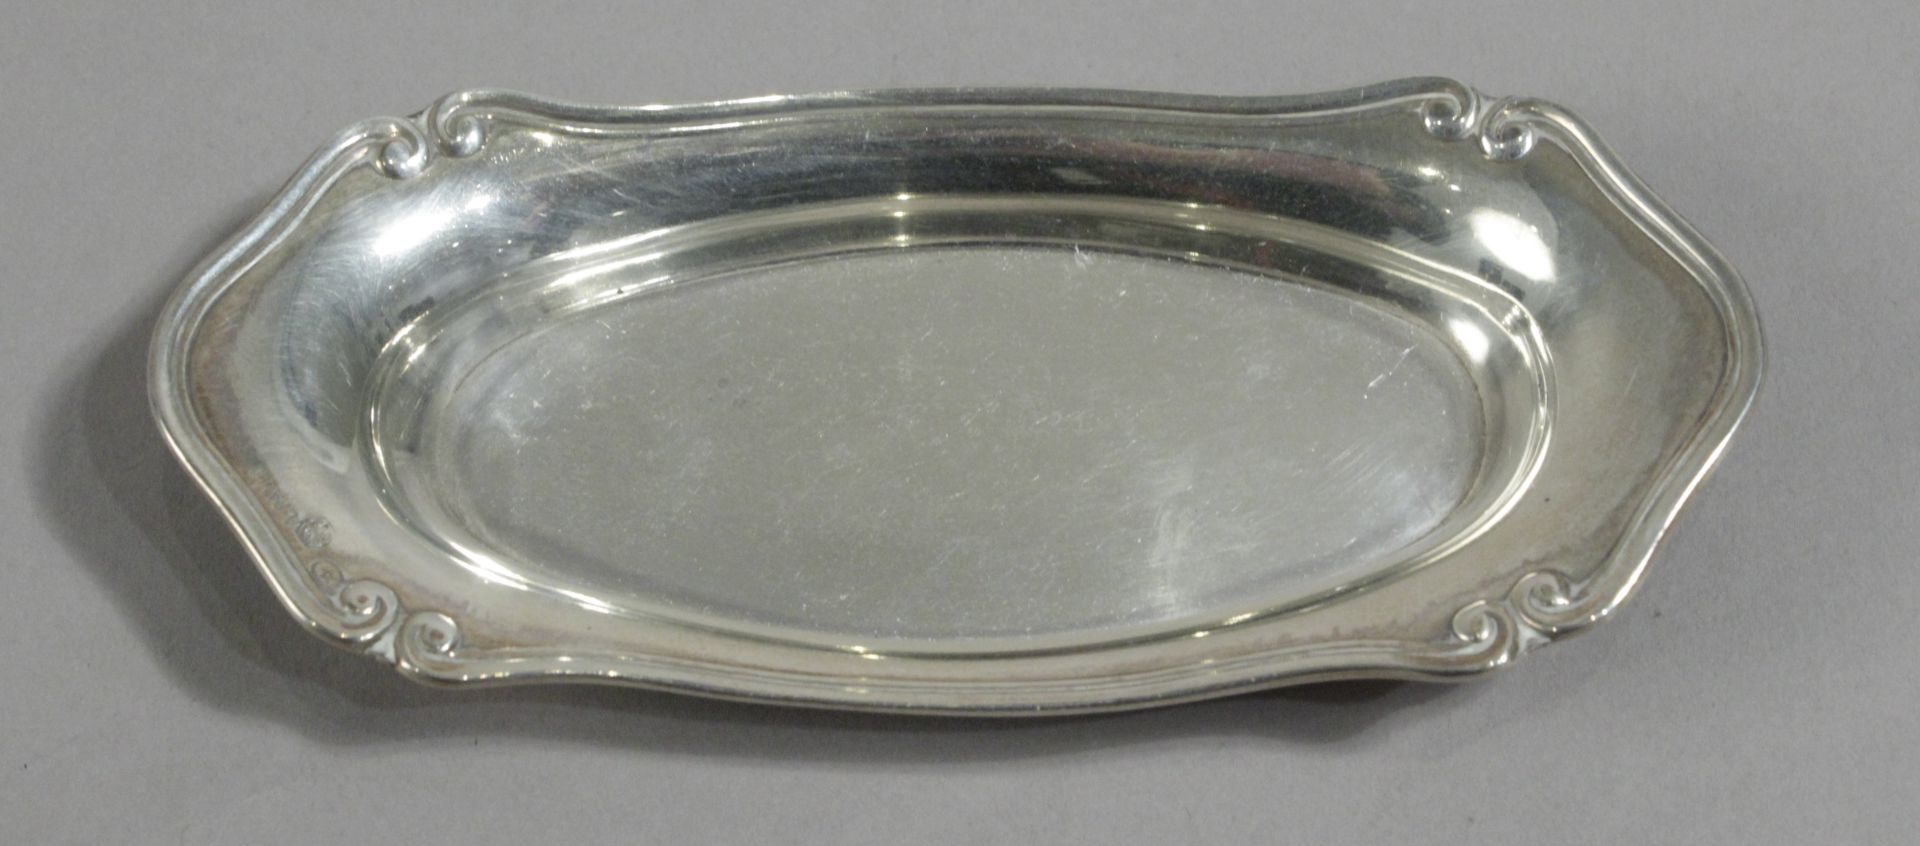 A mid 20th century silver vanity set